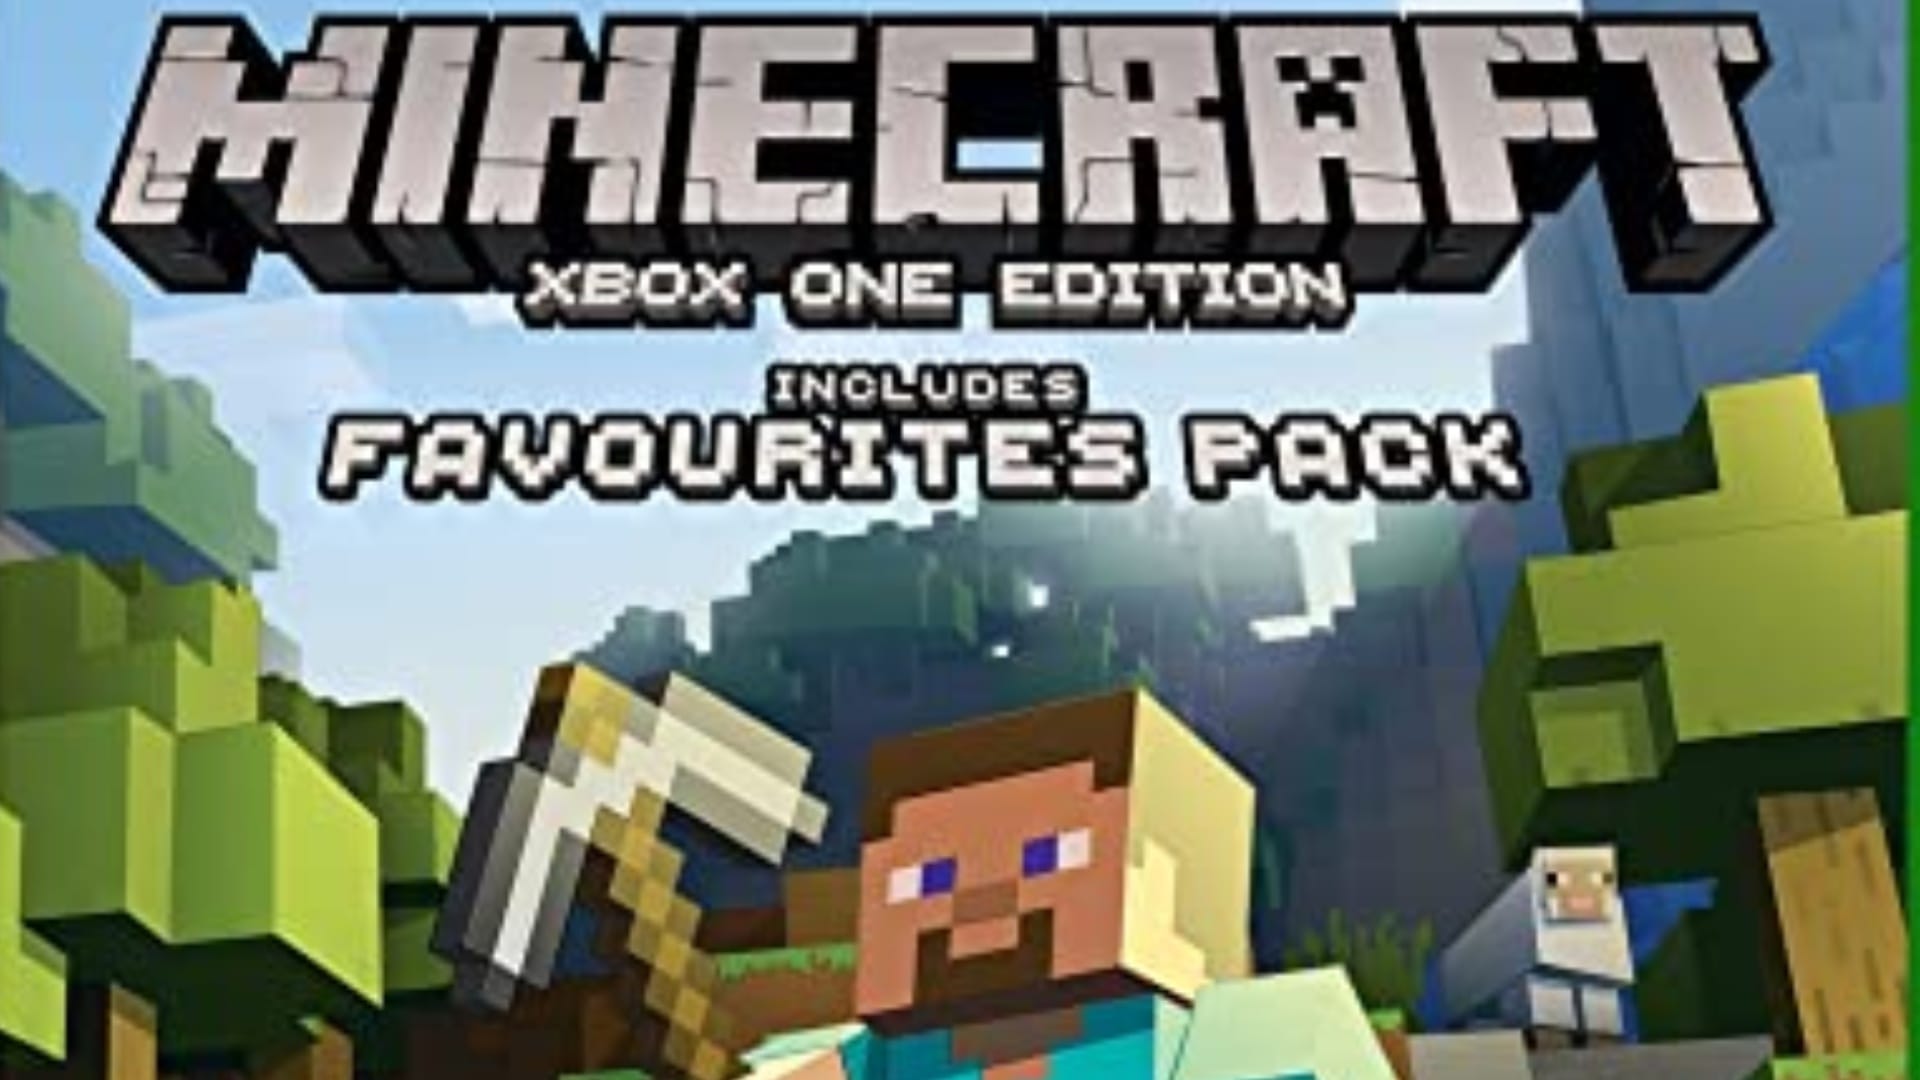 Minecraft Xbox 360 Edition Festive Skin pack on sale news